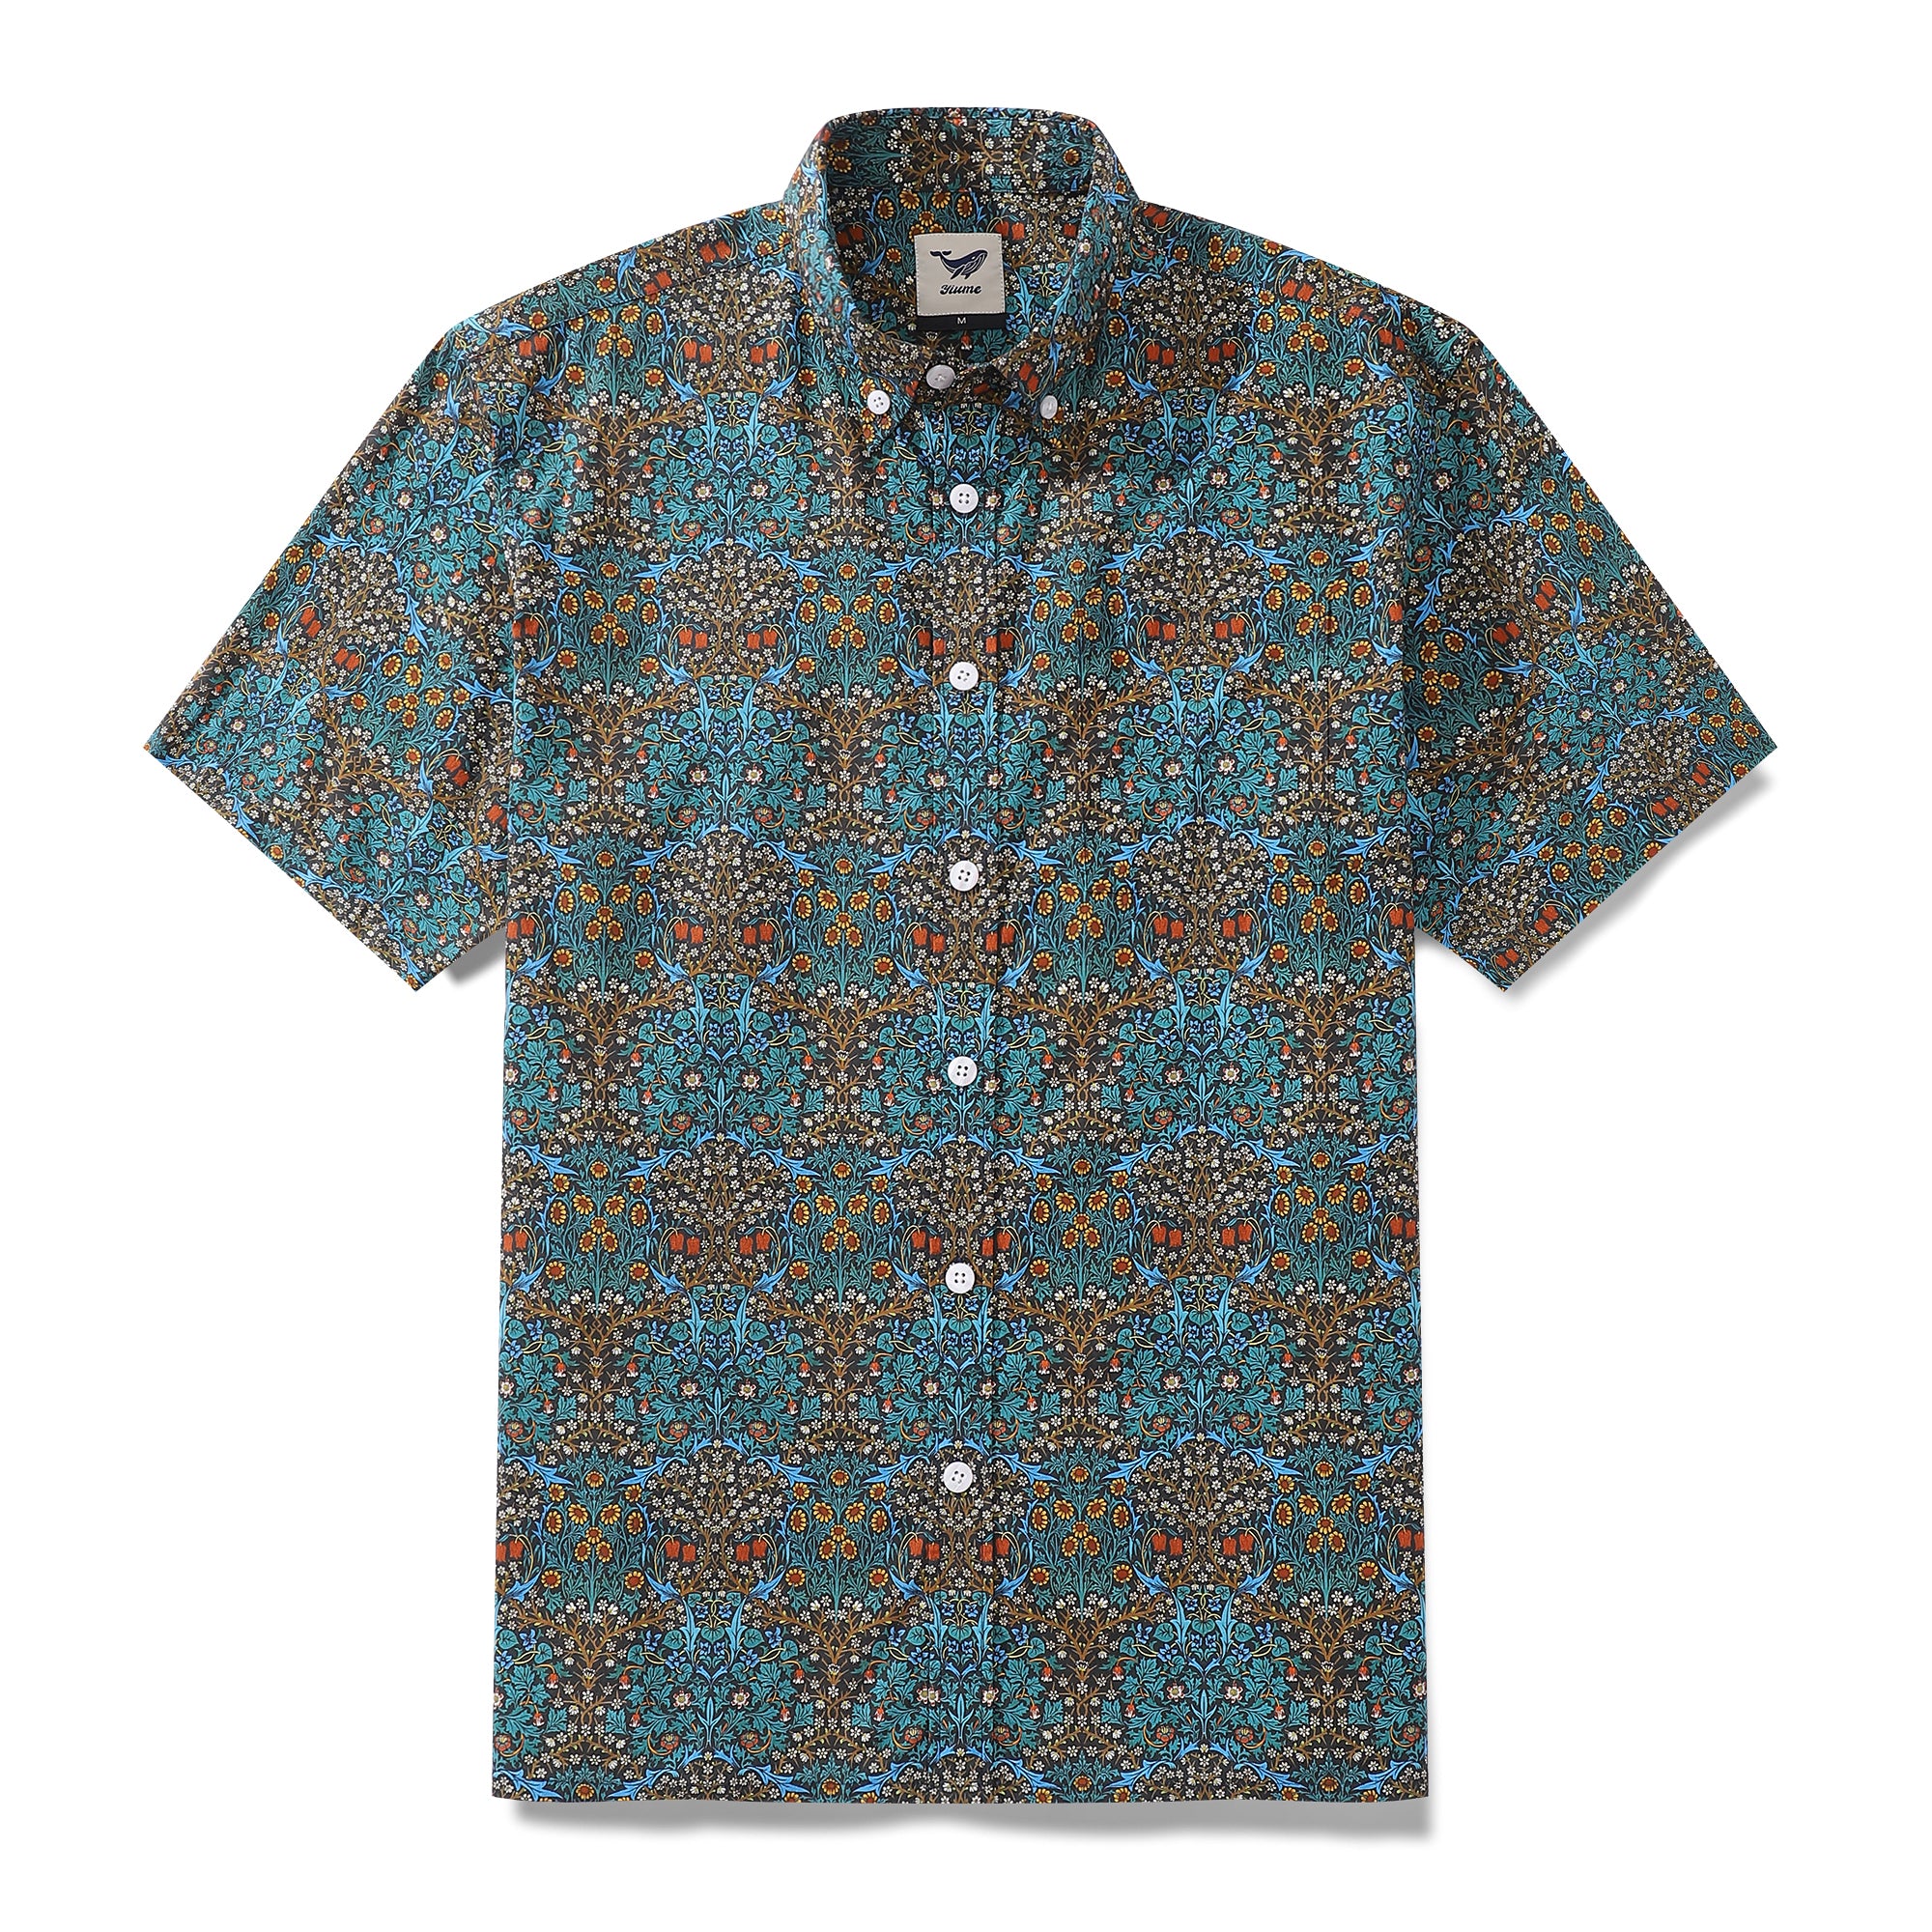 Men's Hawaiian Shirt Tulip Print Cotton Short Sleeve 1940s Vintage Aloha Shirt